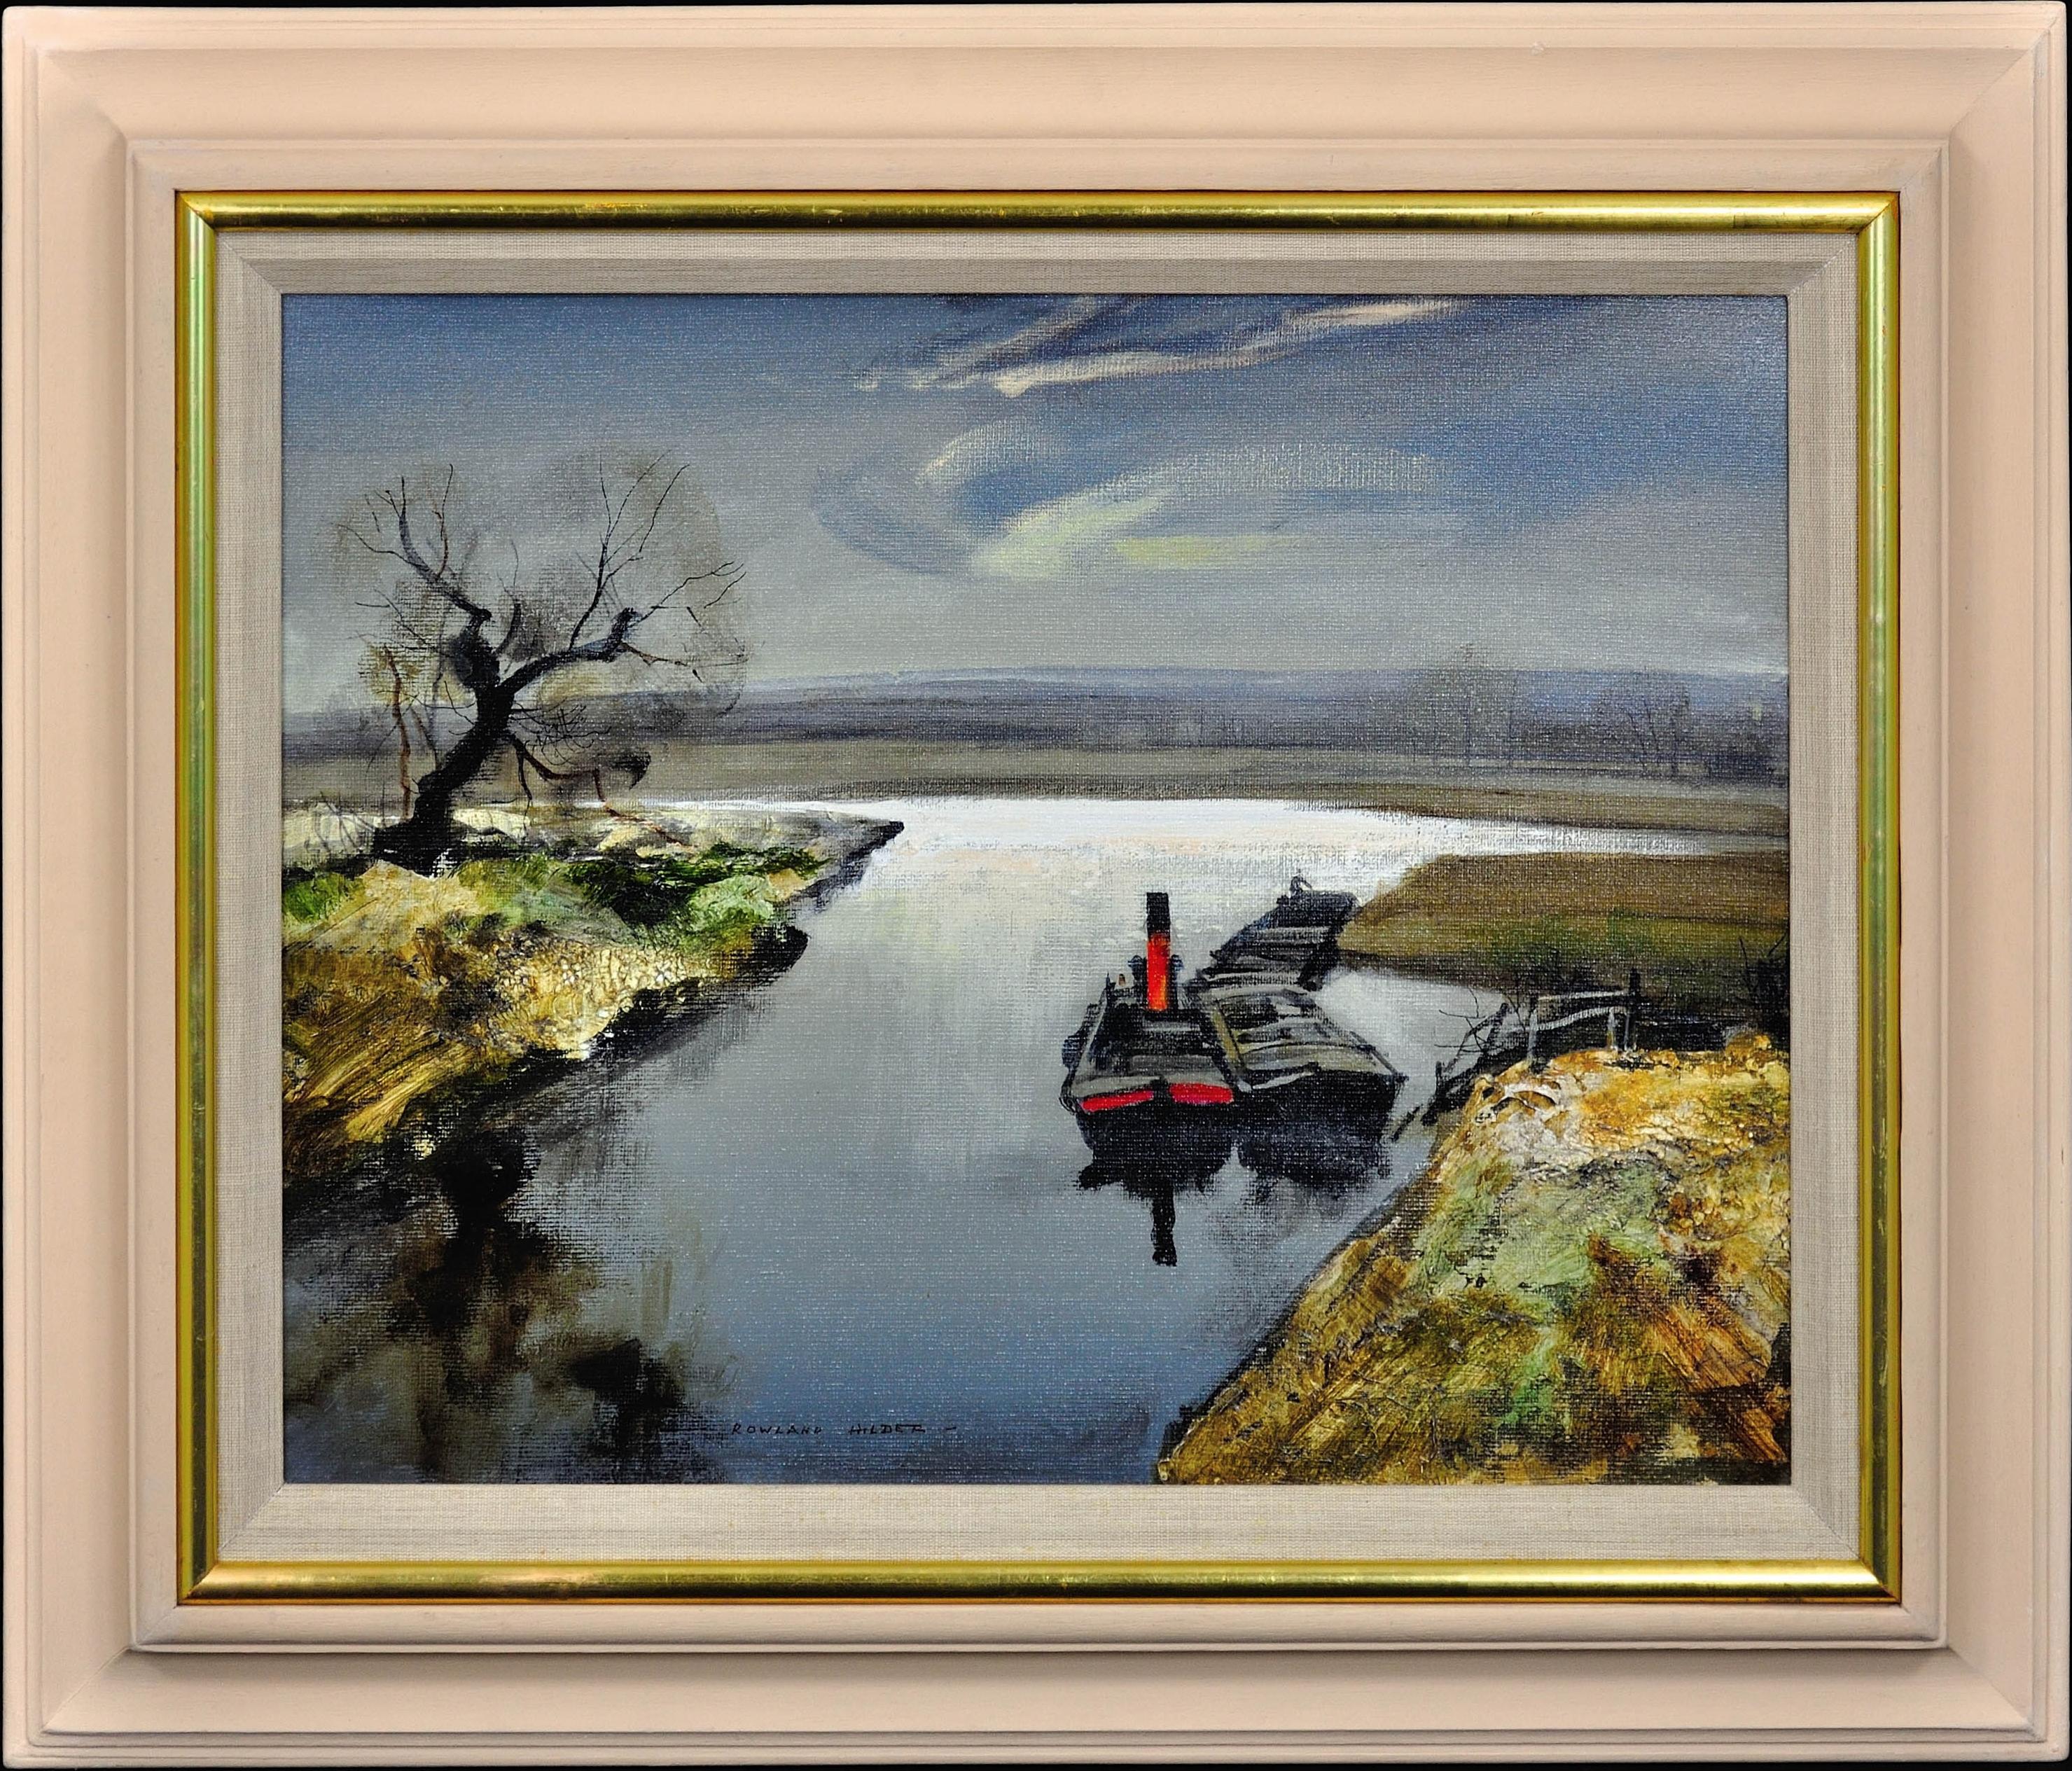 River Bure, Norfolk. Oil Painting. English Rural Landscape. Tug Boat and Barges.